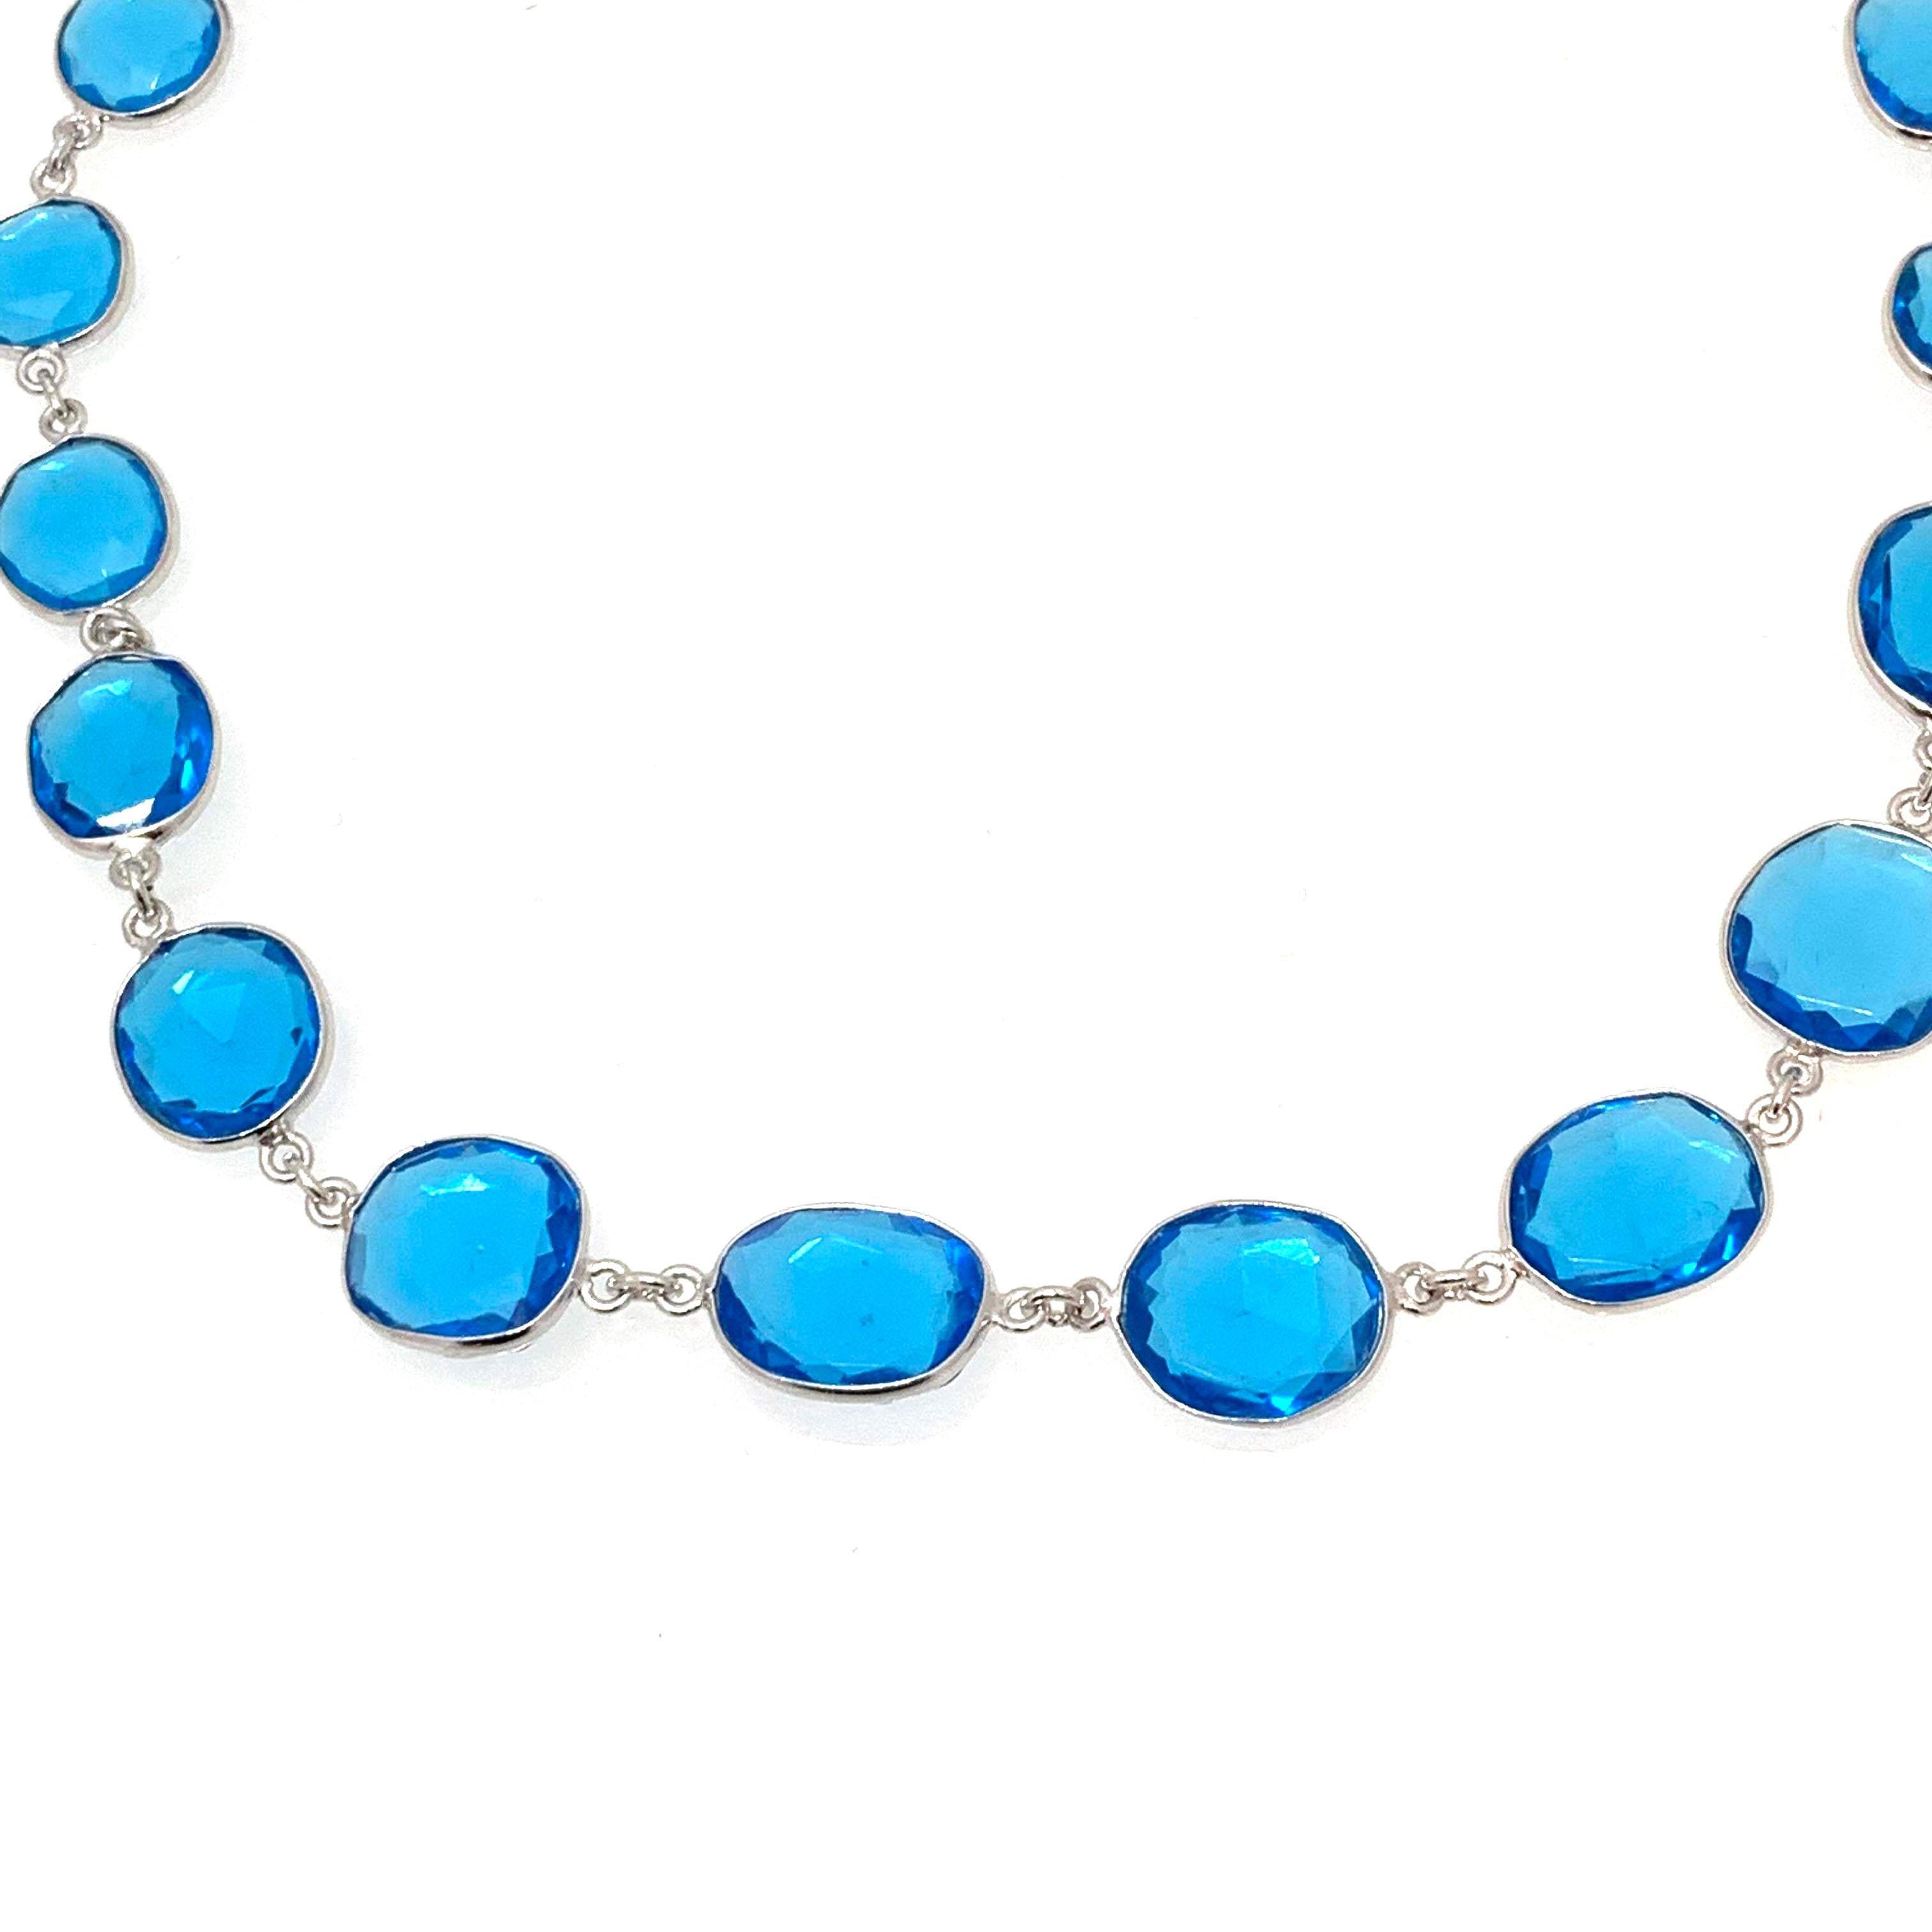 Contemporary Bezel Set Blue Quartz Sterling Silver Necklace 16